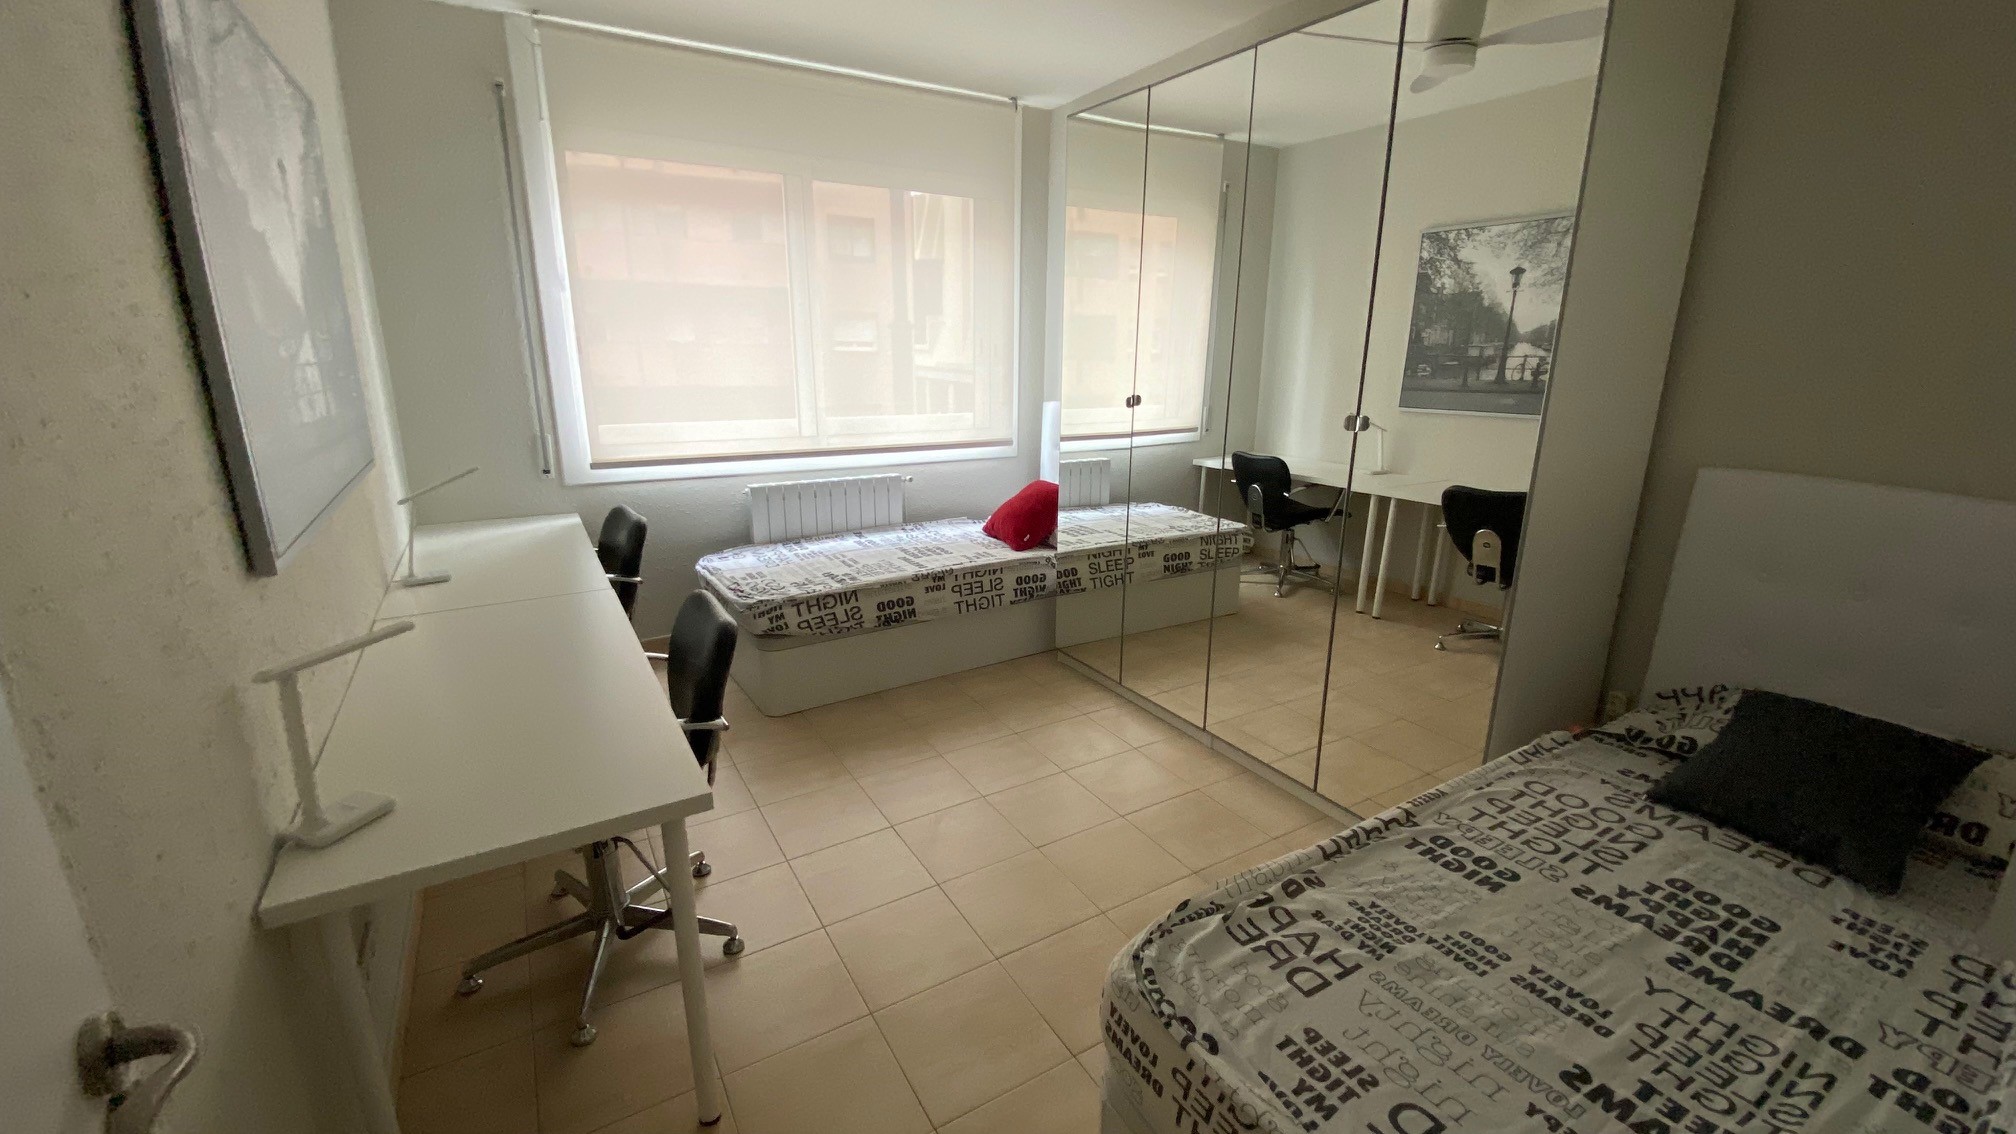 Code 1017697- Copenhague. Single/Double room in a brand new student flat. Sabadell well connected. Creu Alta neighbourhood